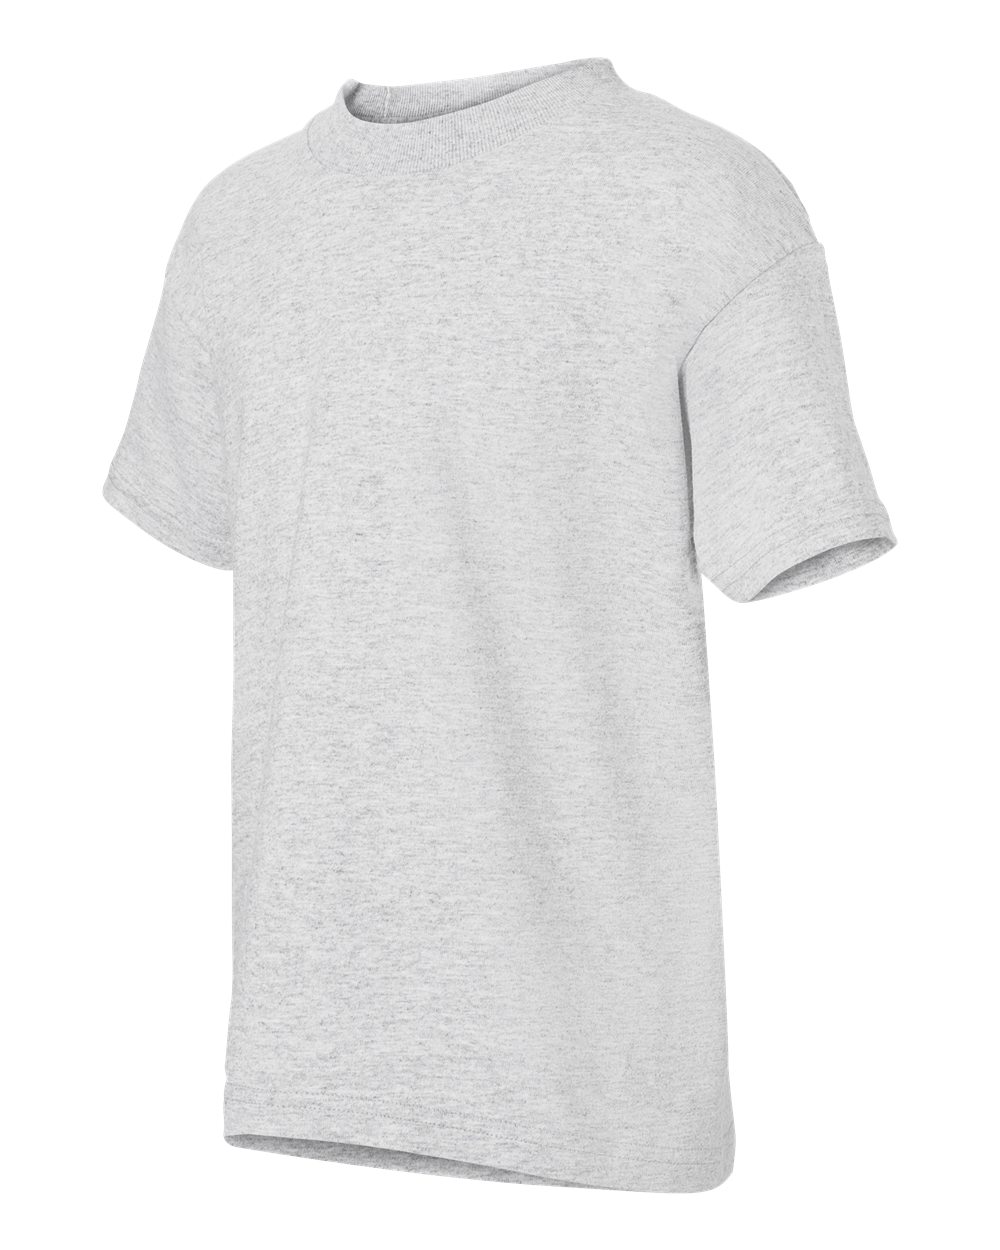 Hanes 5480 - ComfortSoft Heavyweight Youth T-Shirt